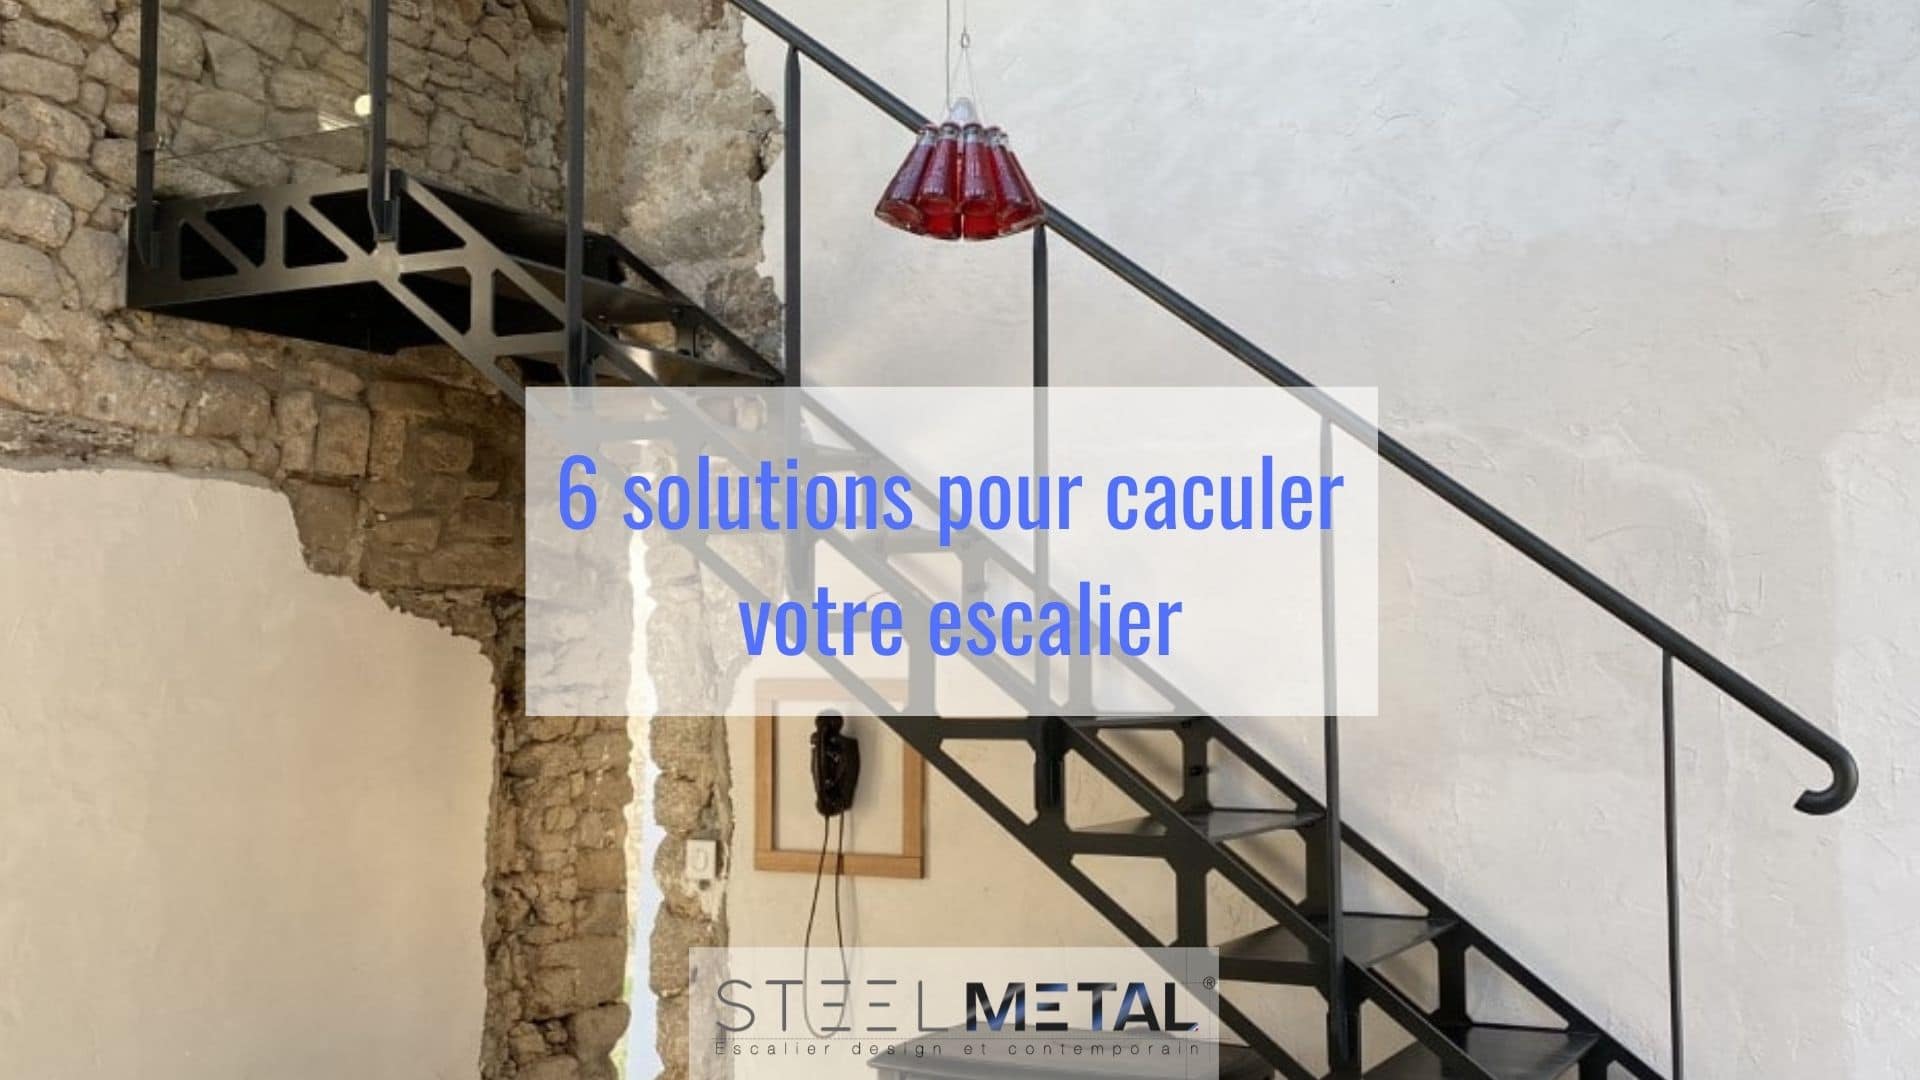 Solitario Interactuar formación 6 solutions pour calculer votre escalier | SteelMetal